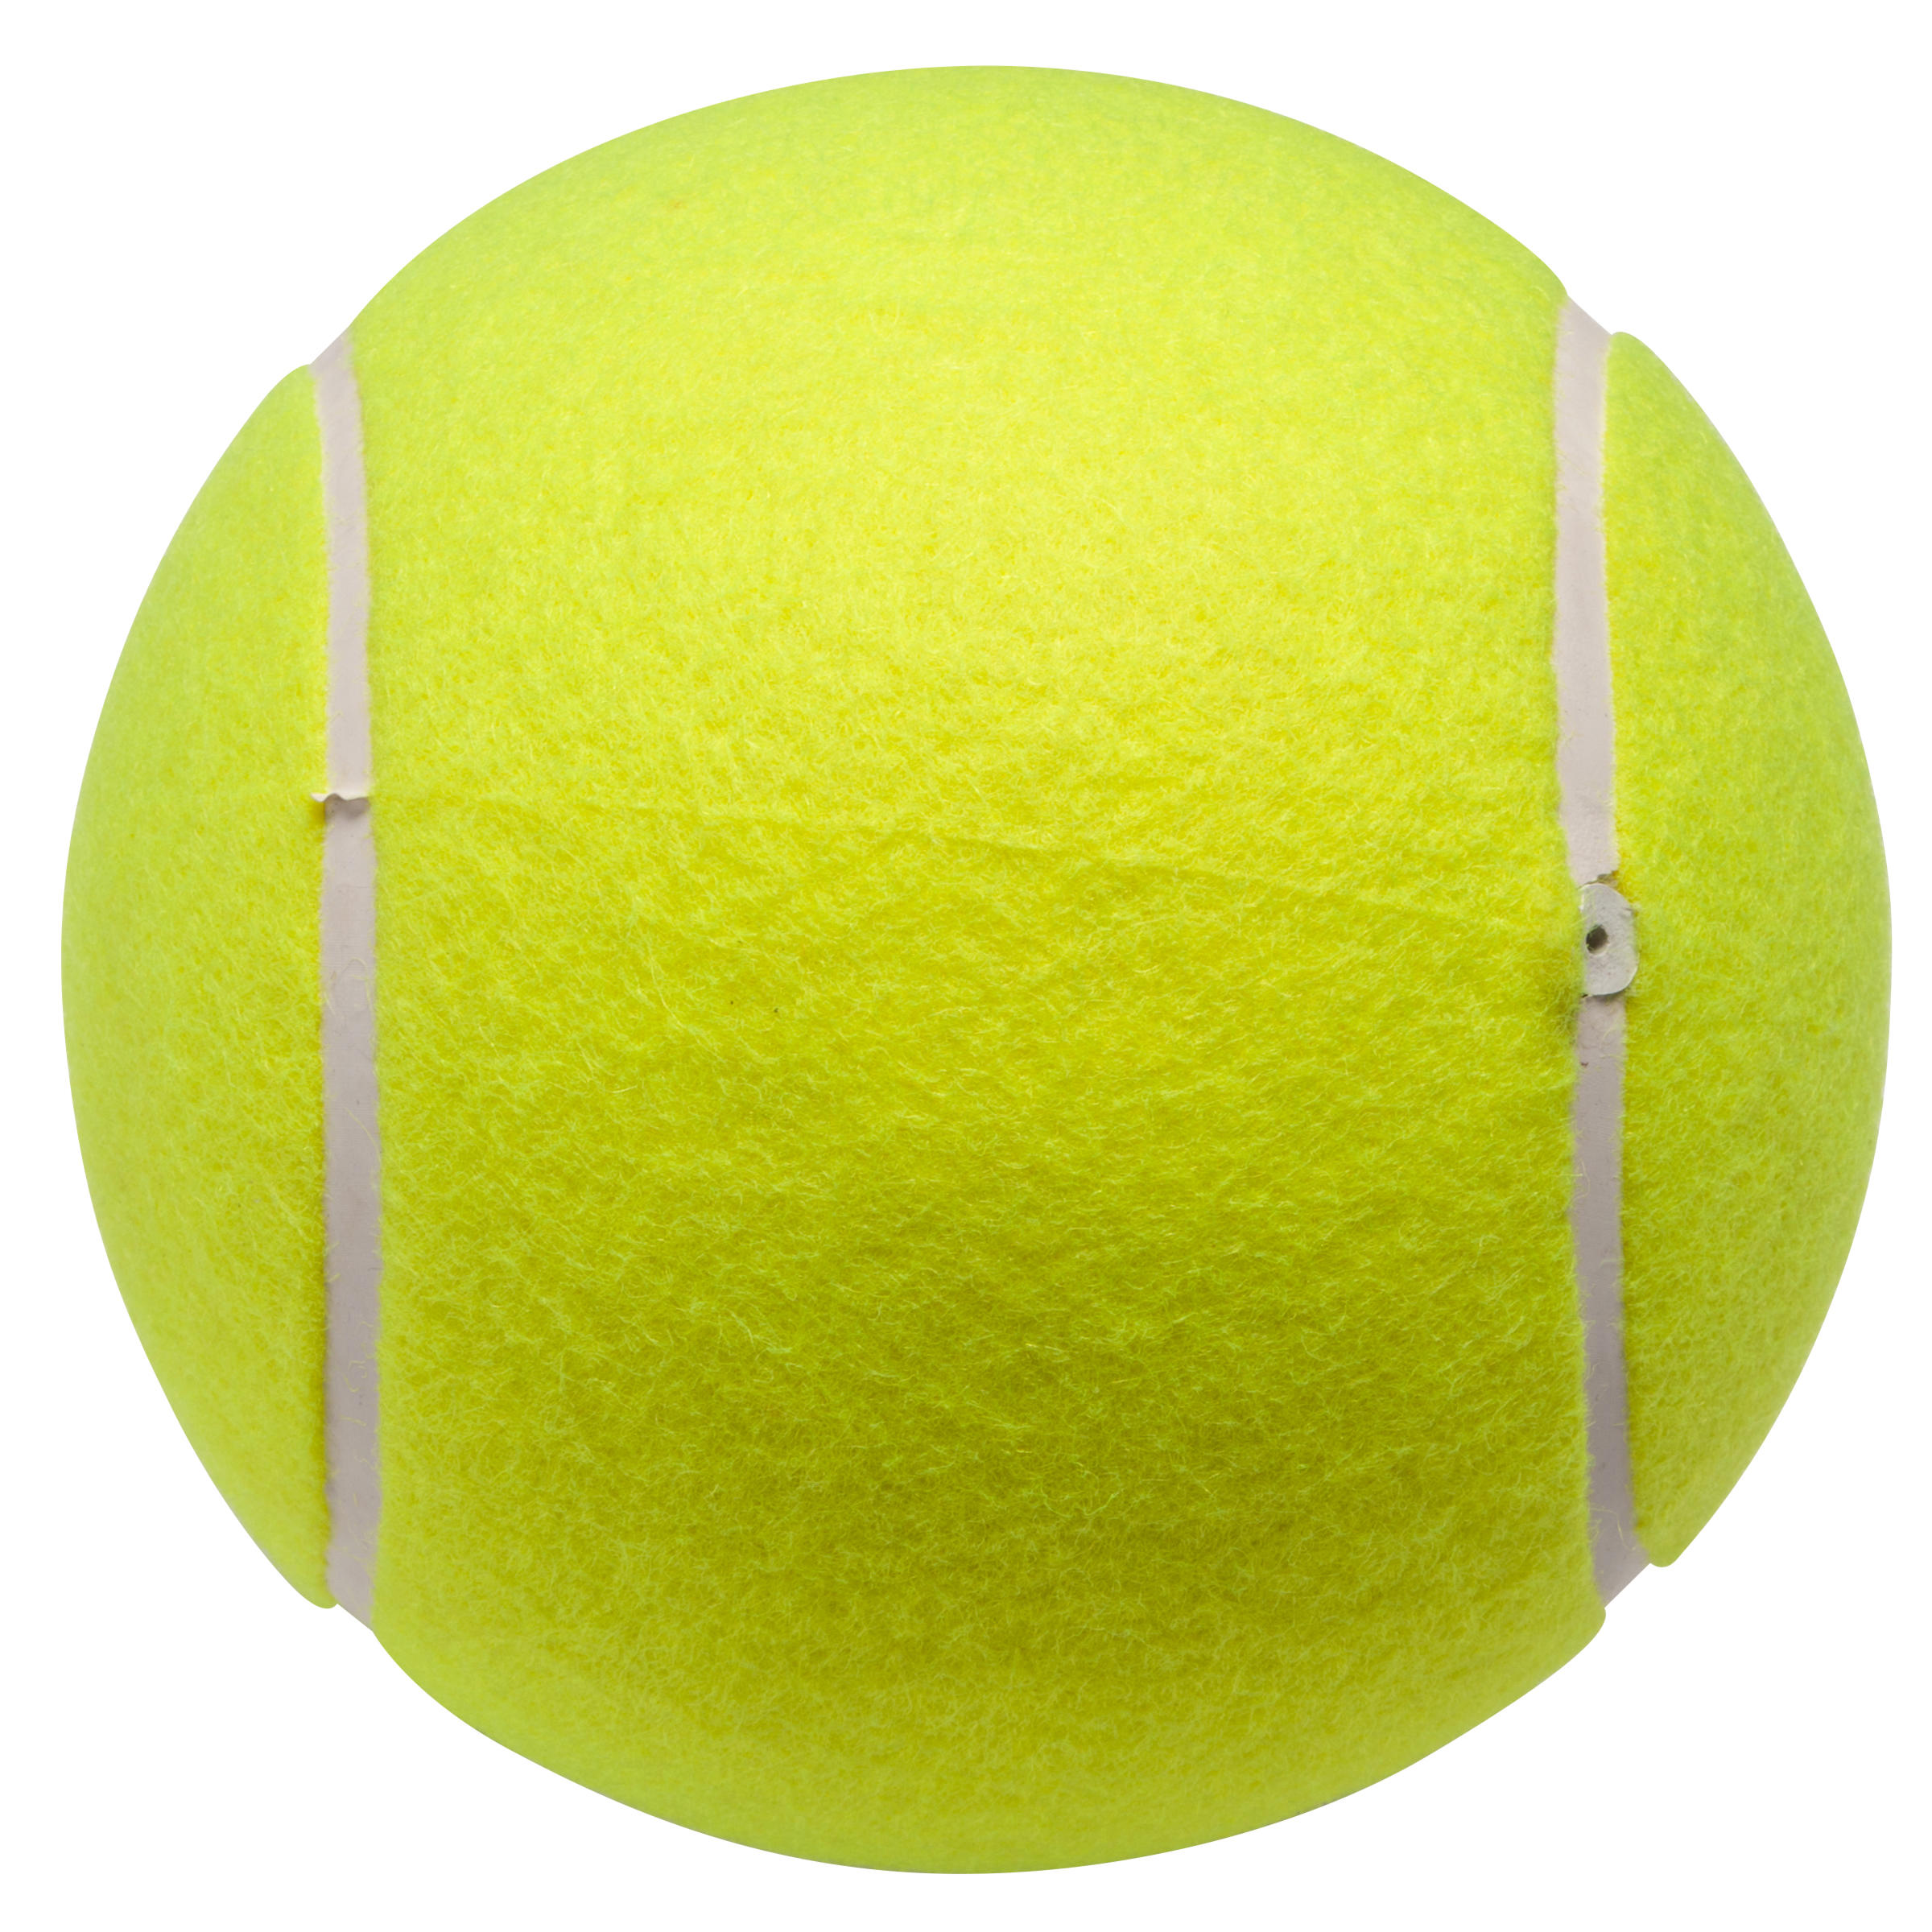 Jumbo Tennis Ball - Yellow 3/4